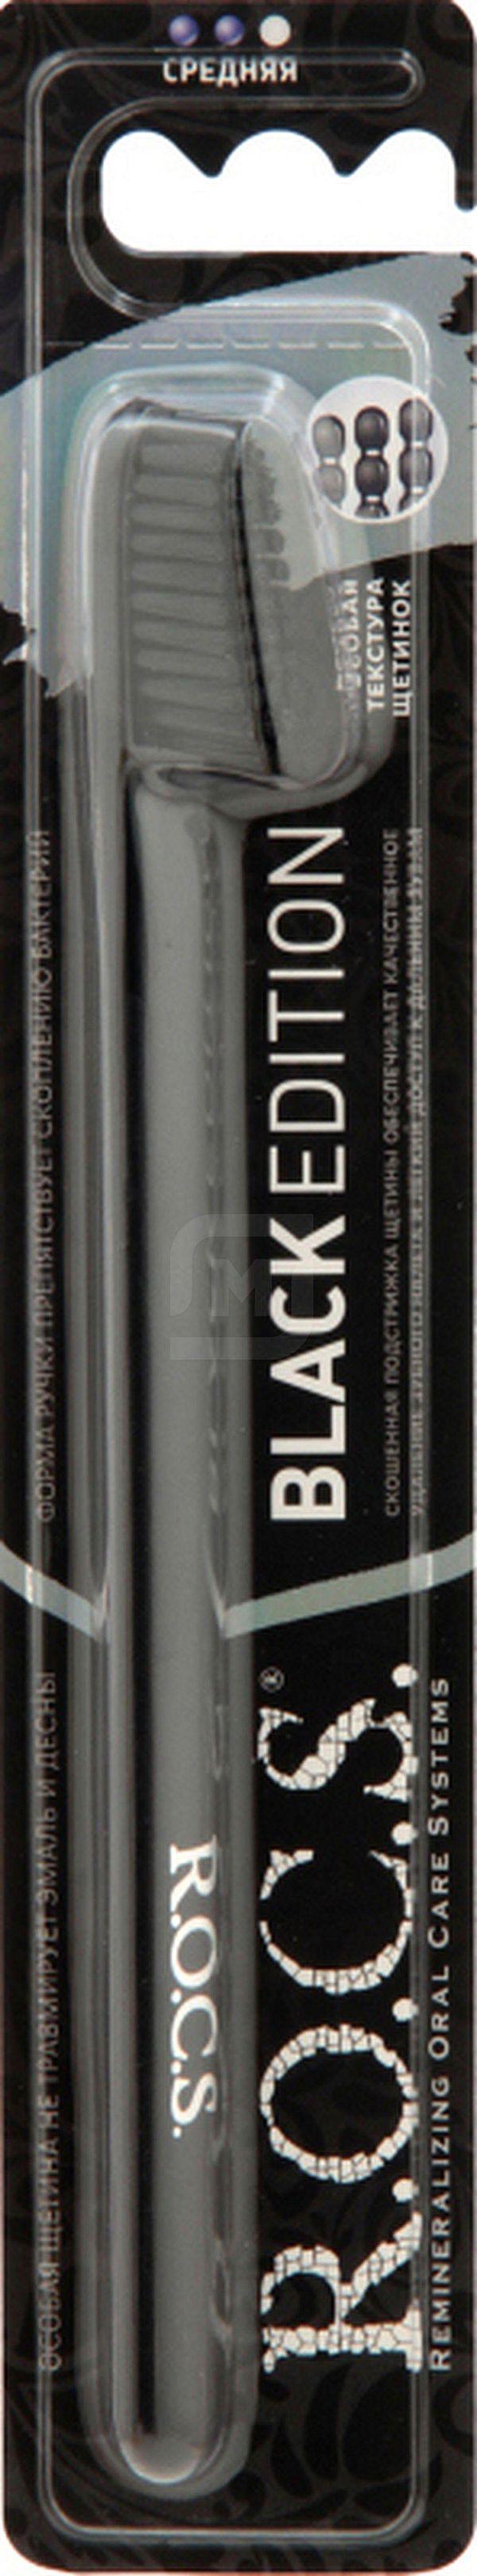 Зубная щетка R.O.C.S. Black Edition Classic средней жесткости